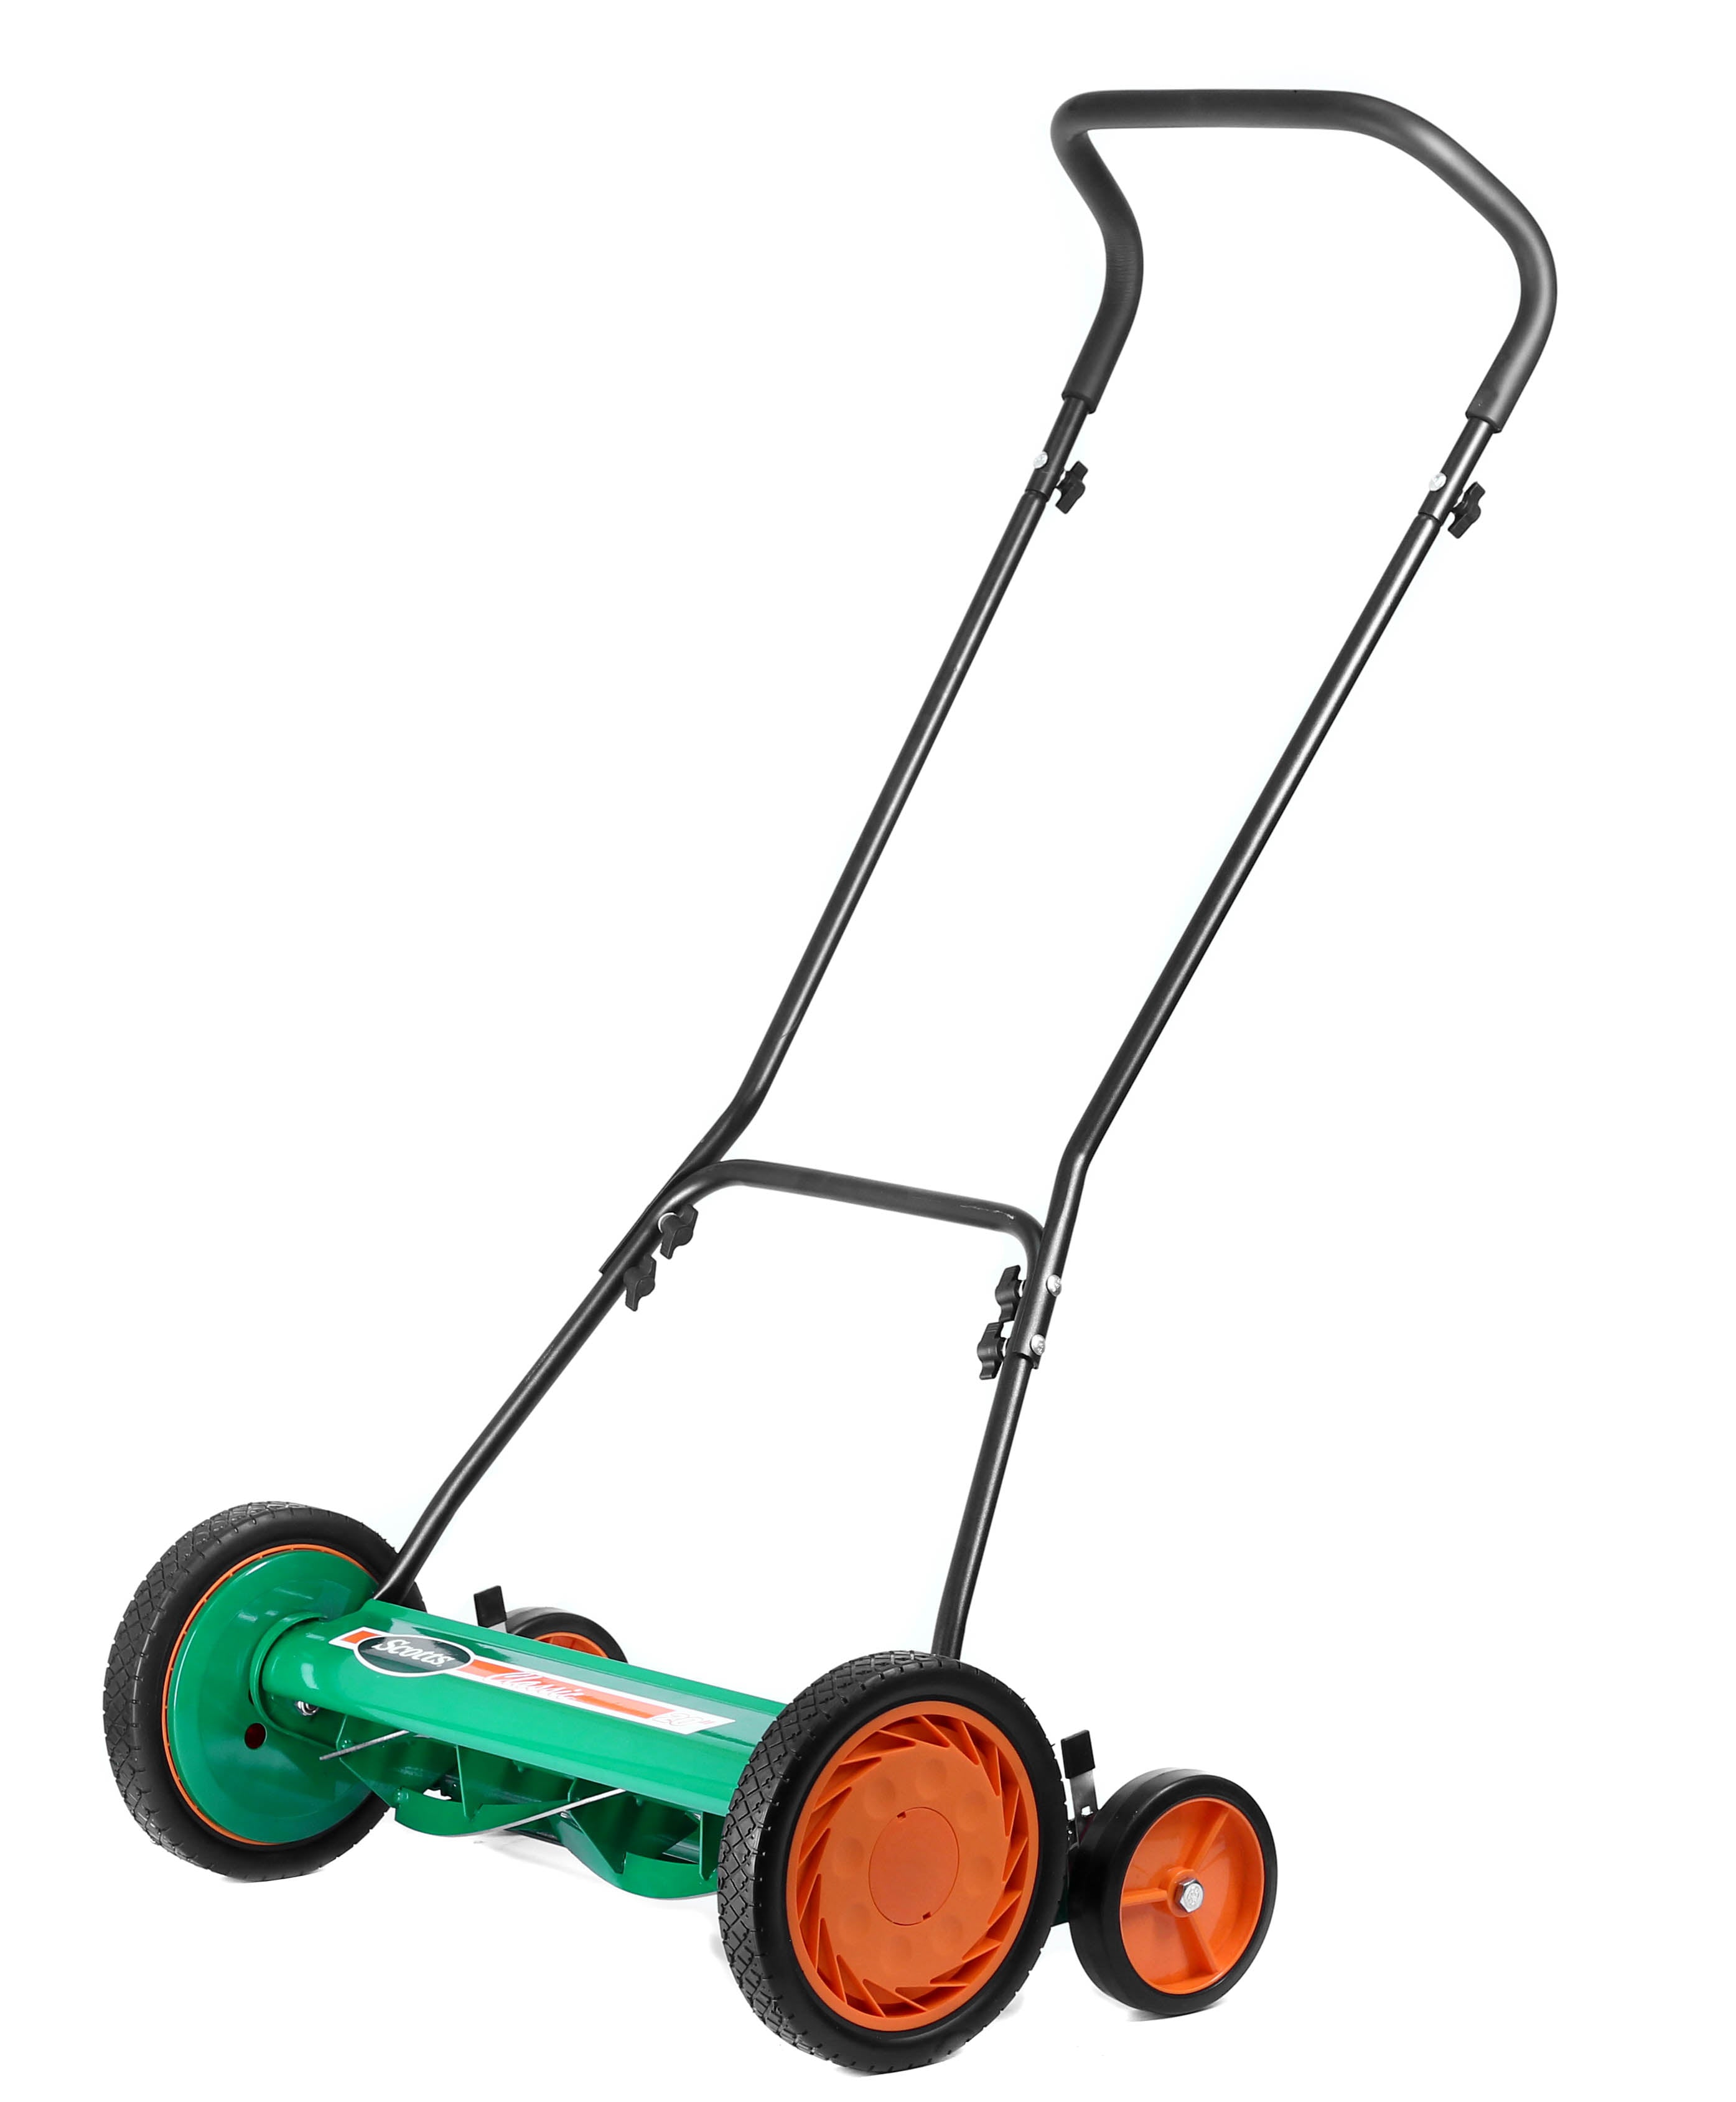 Scotts 20 Manual Reel Mower – American Lawn Mower Co. EST 1895